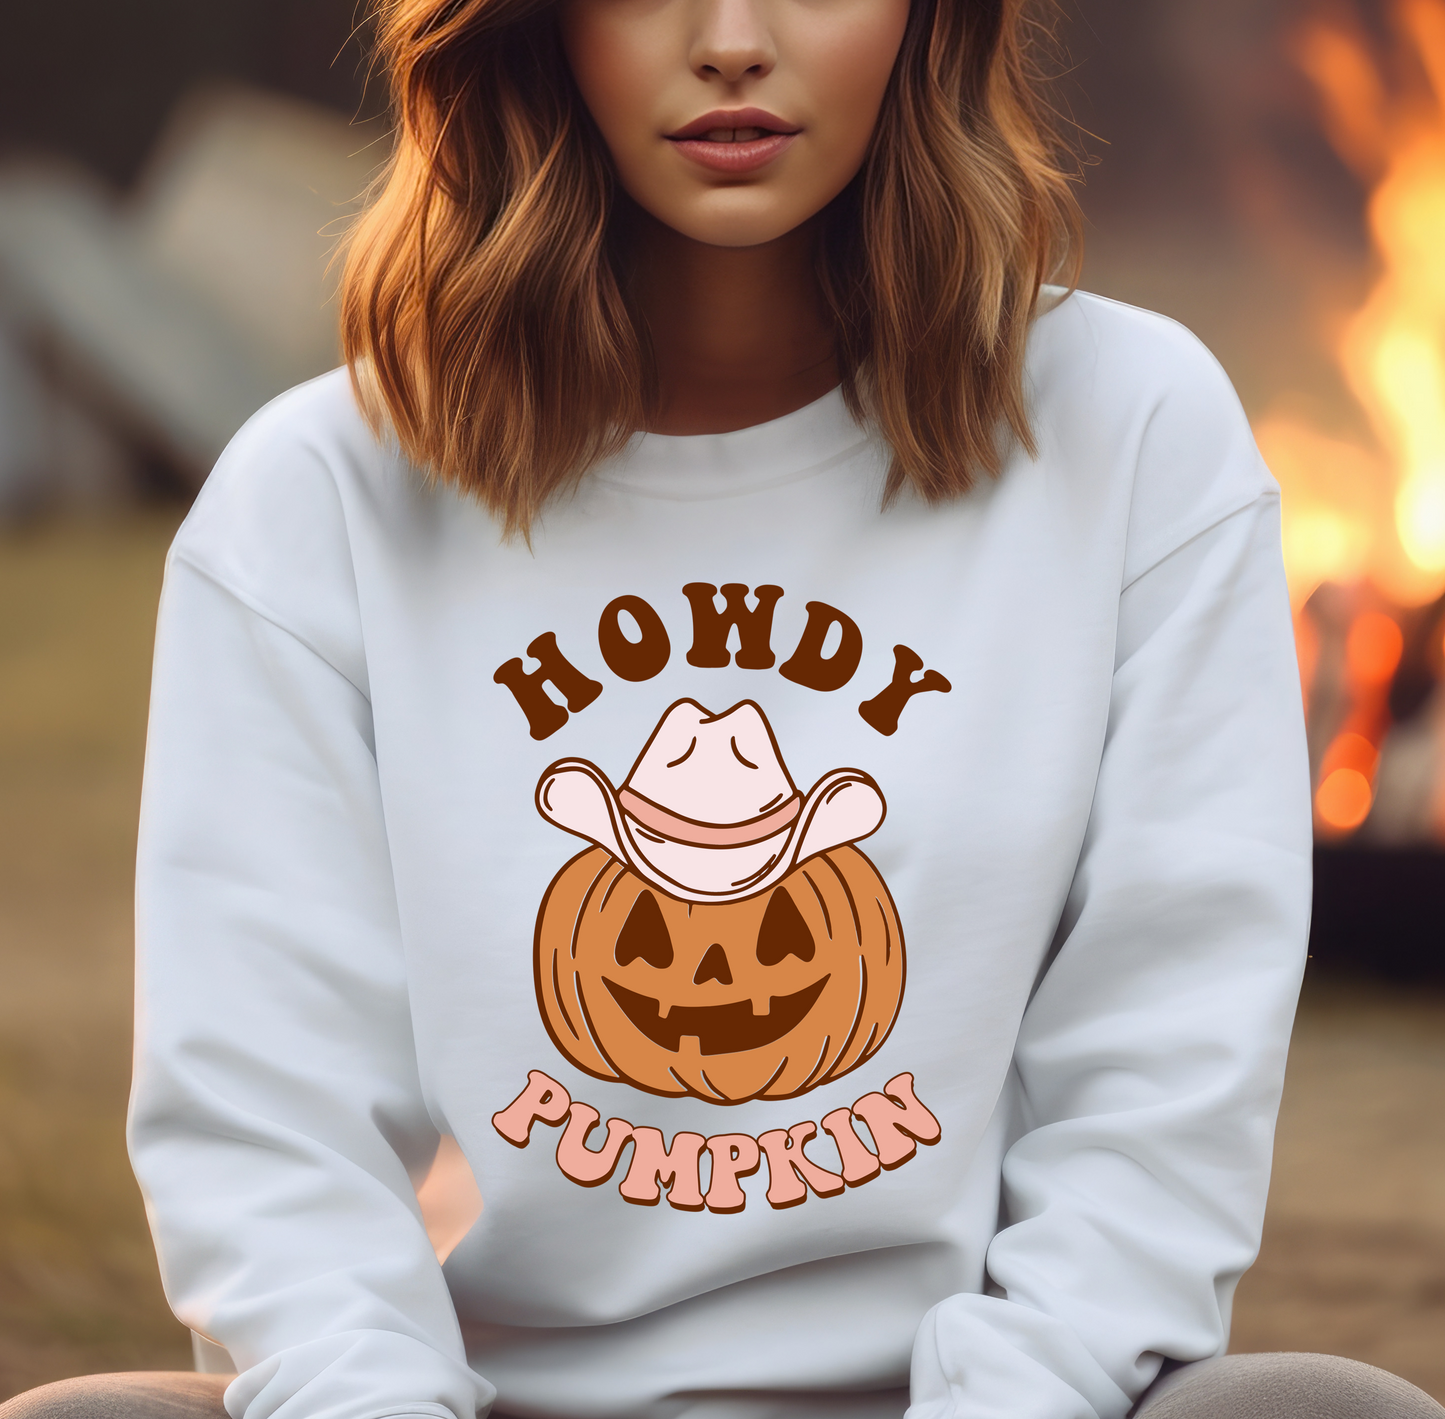 Howdy Pumpkin - Full Color Transfer